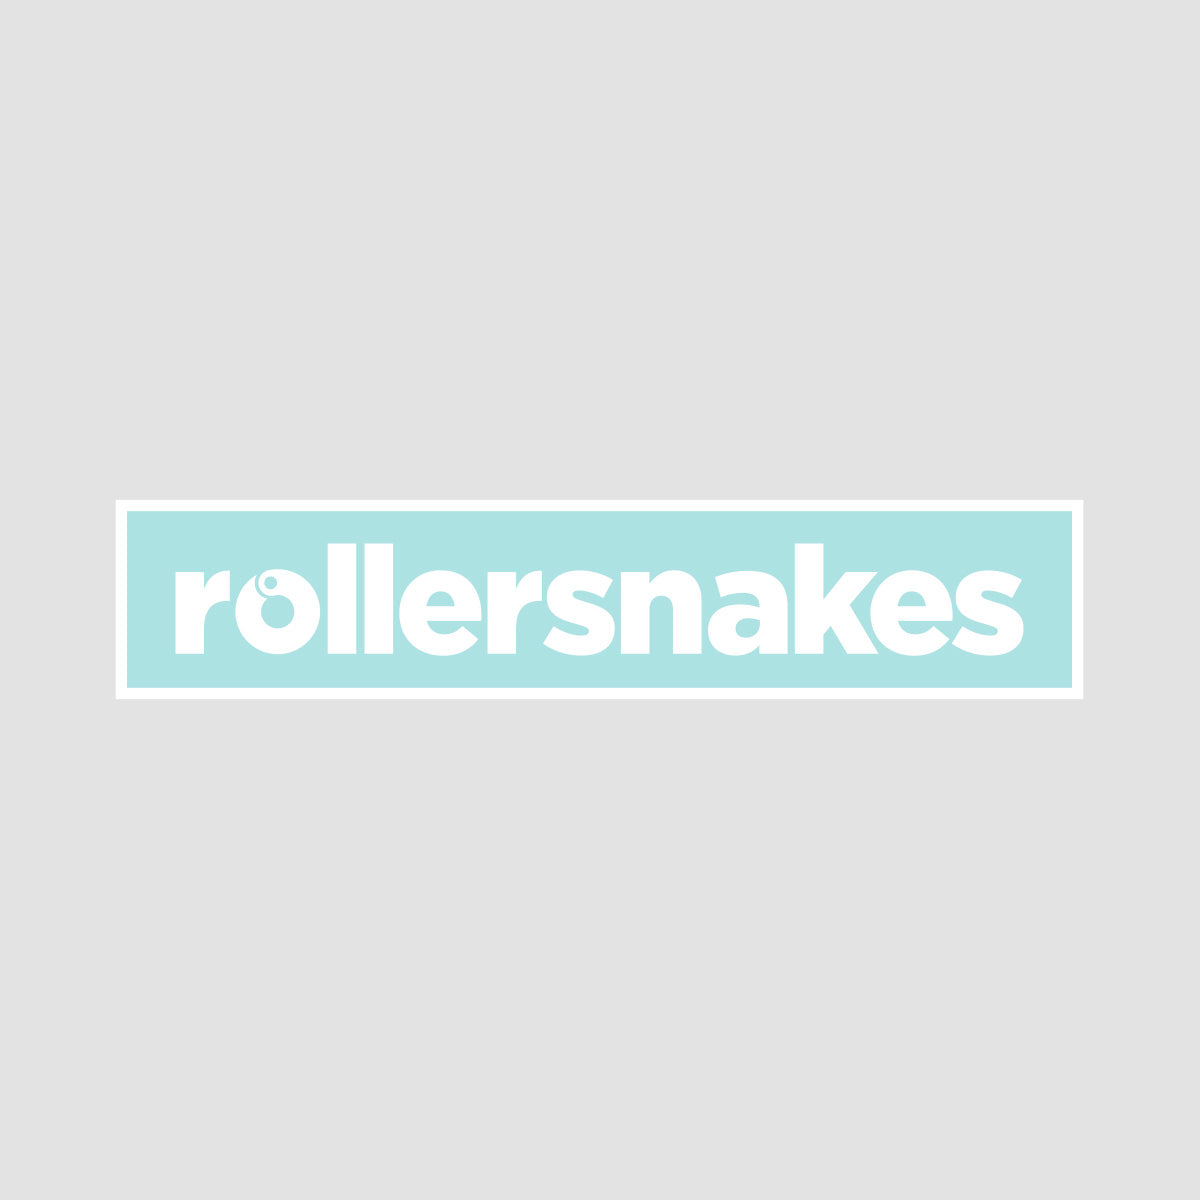 Rollersnakes WordMark Sticker Teal 200x41mm